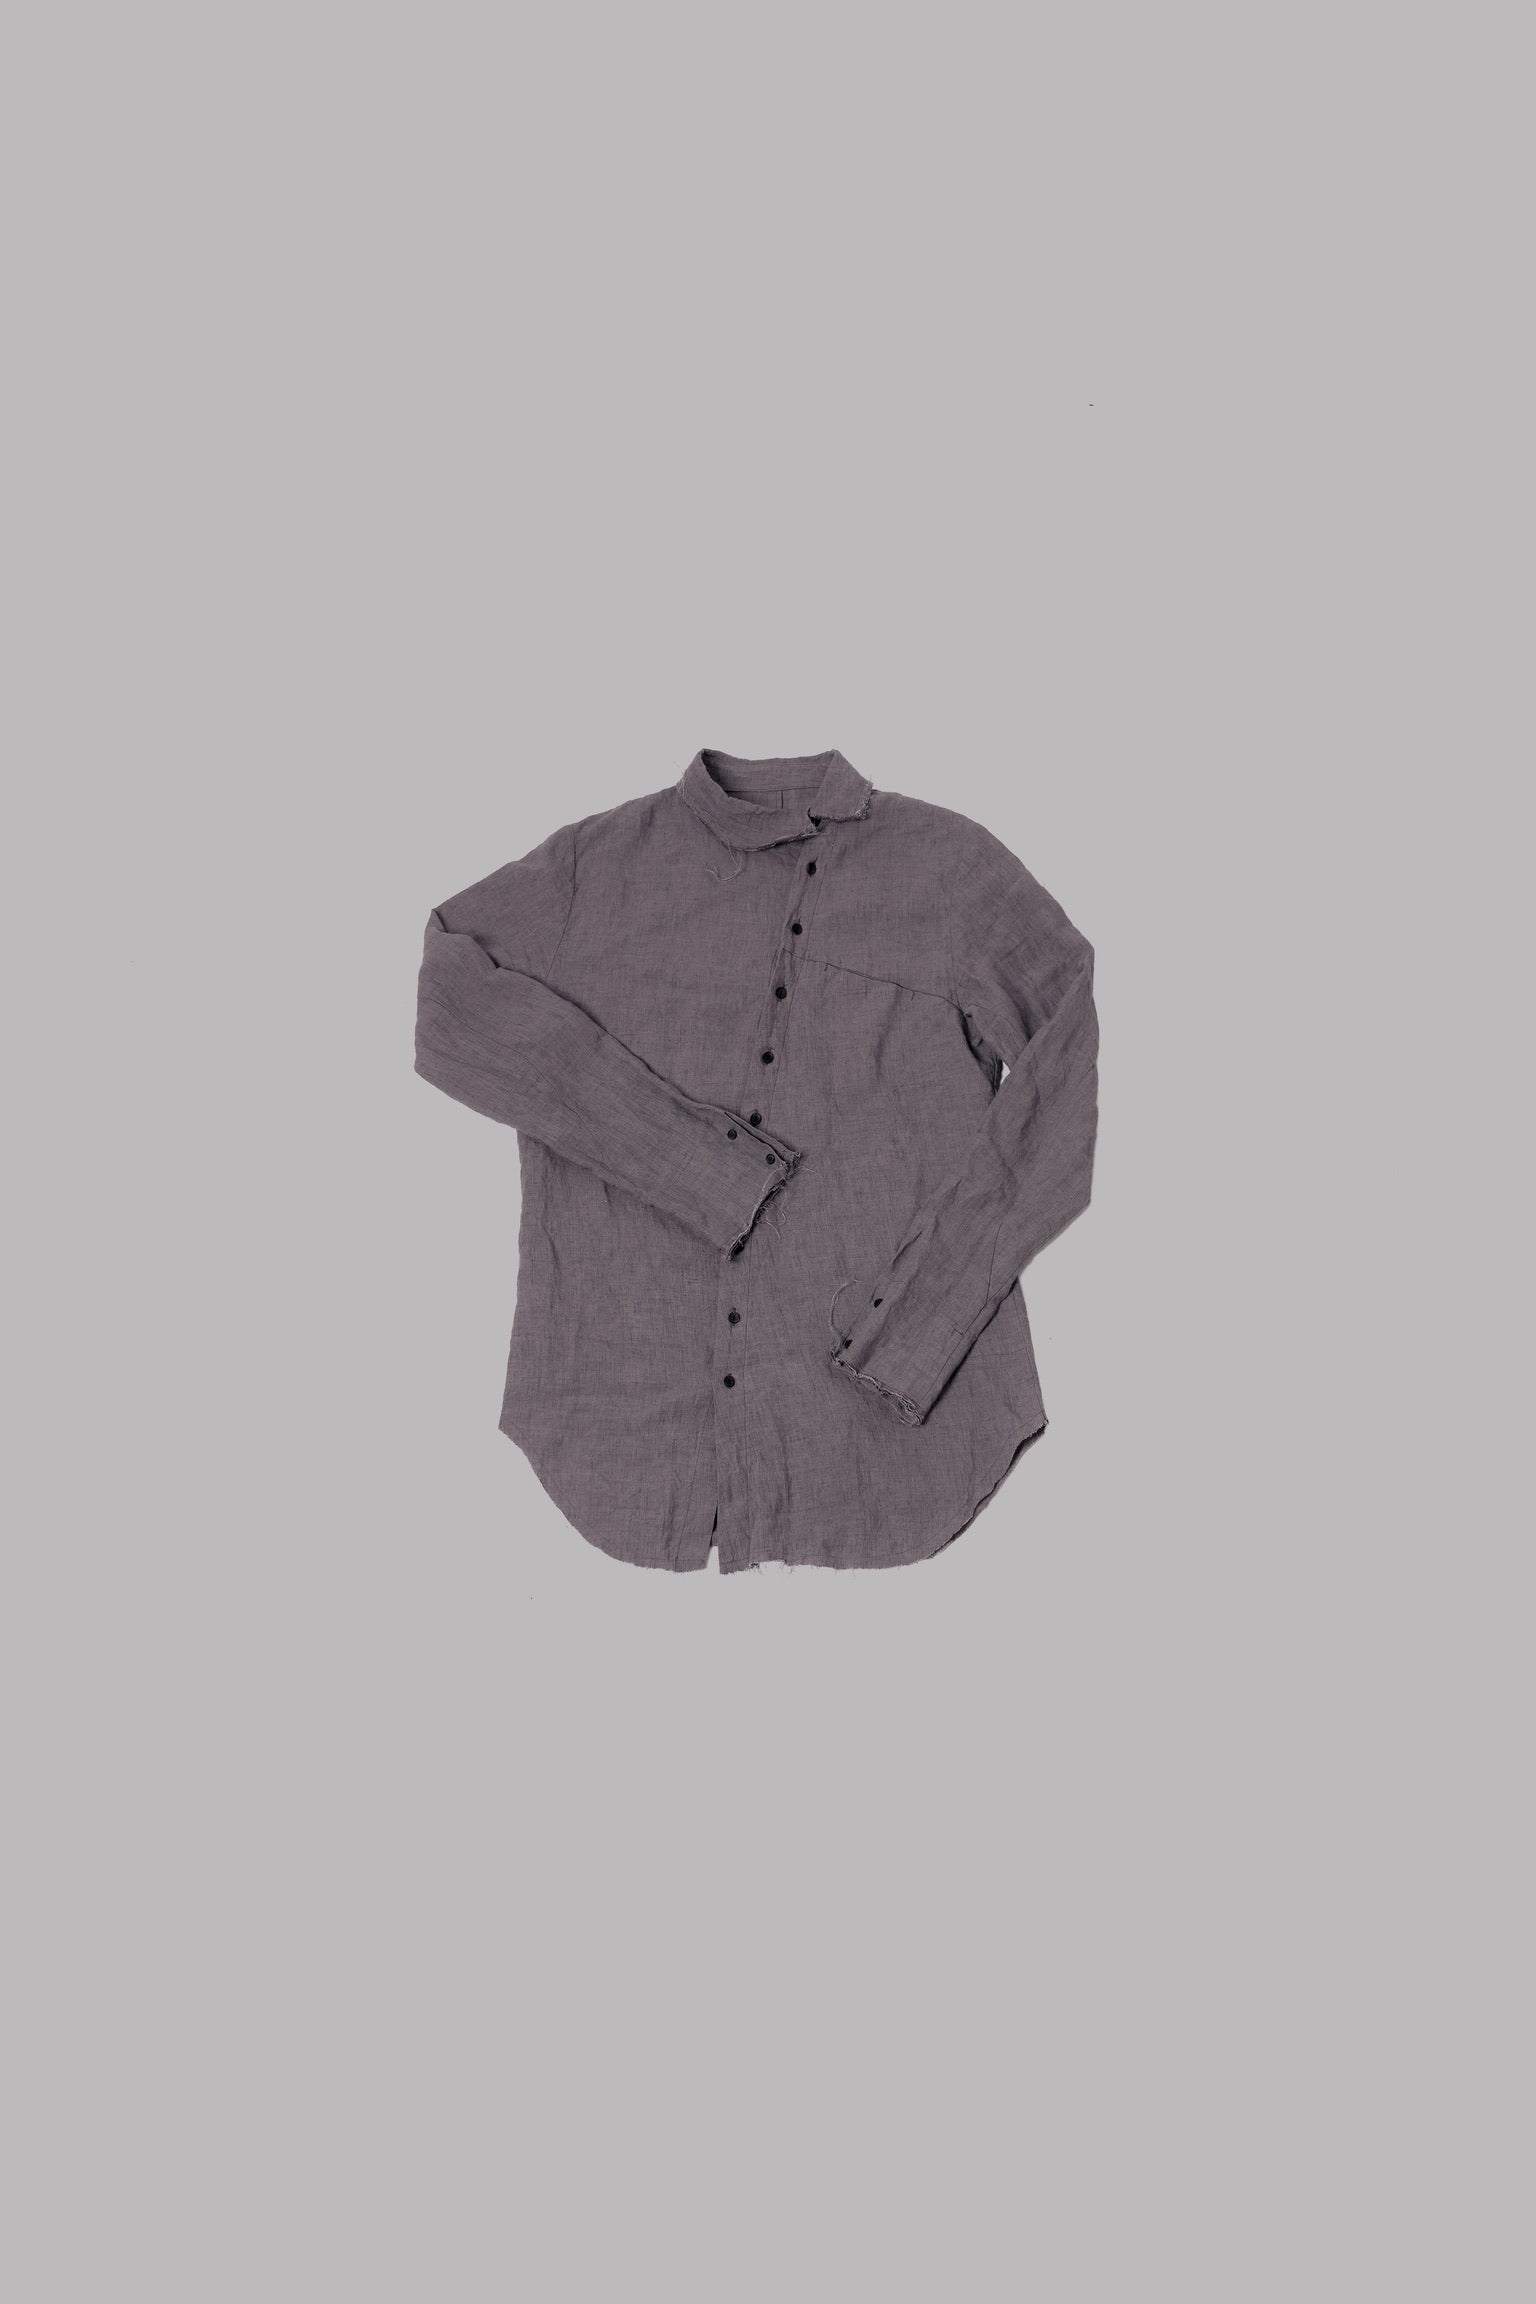 011- The Hole Shirt (Purple Grey)